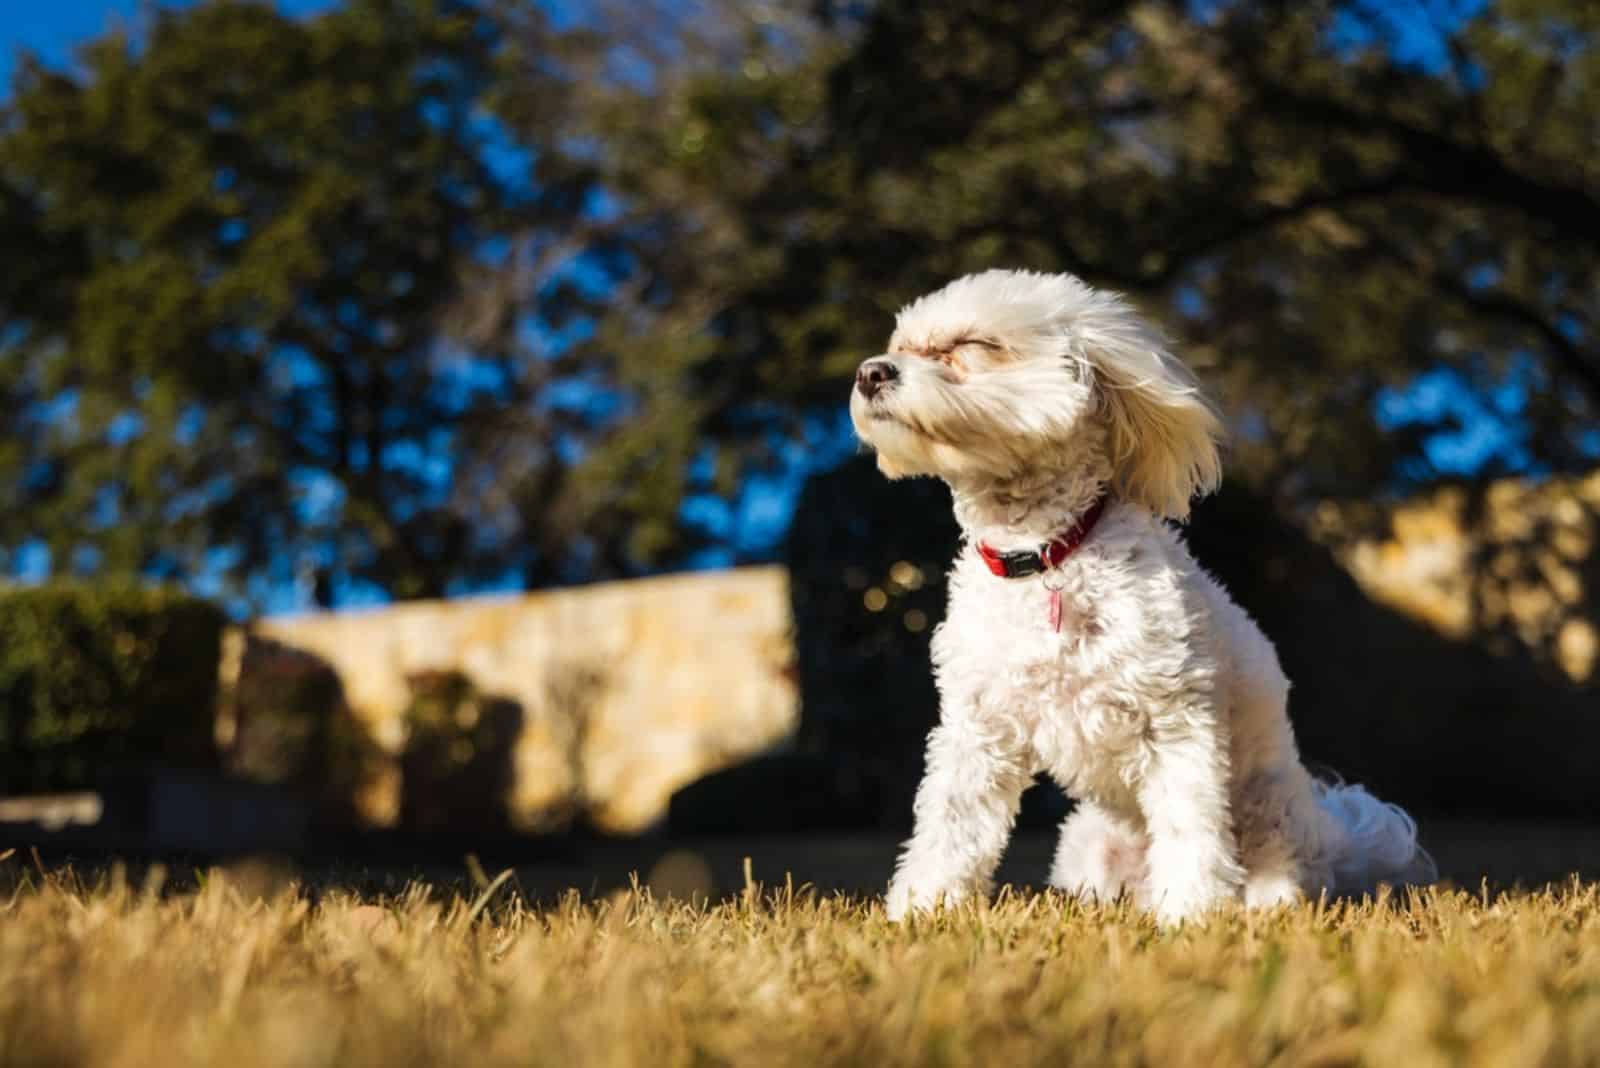 Adorable Maltipoo puppy enjoying the wind in a backyard